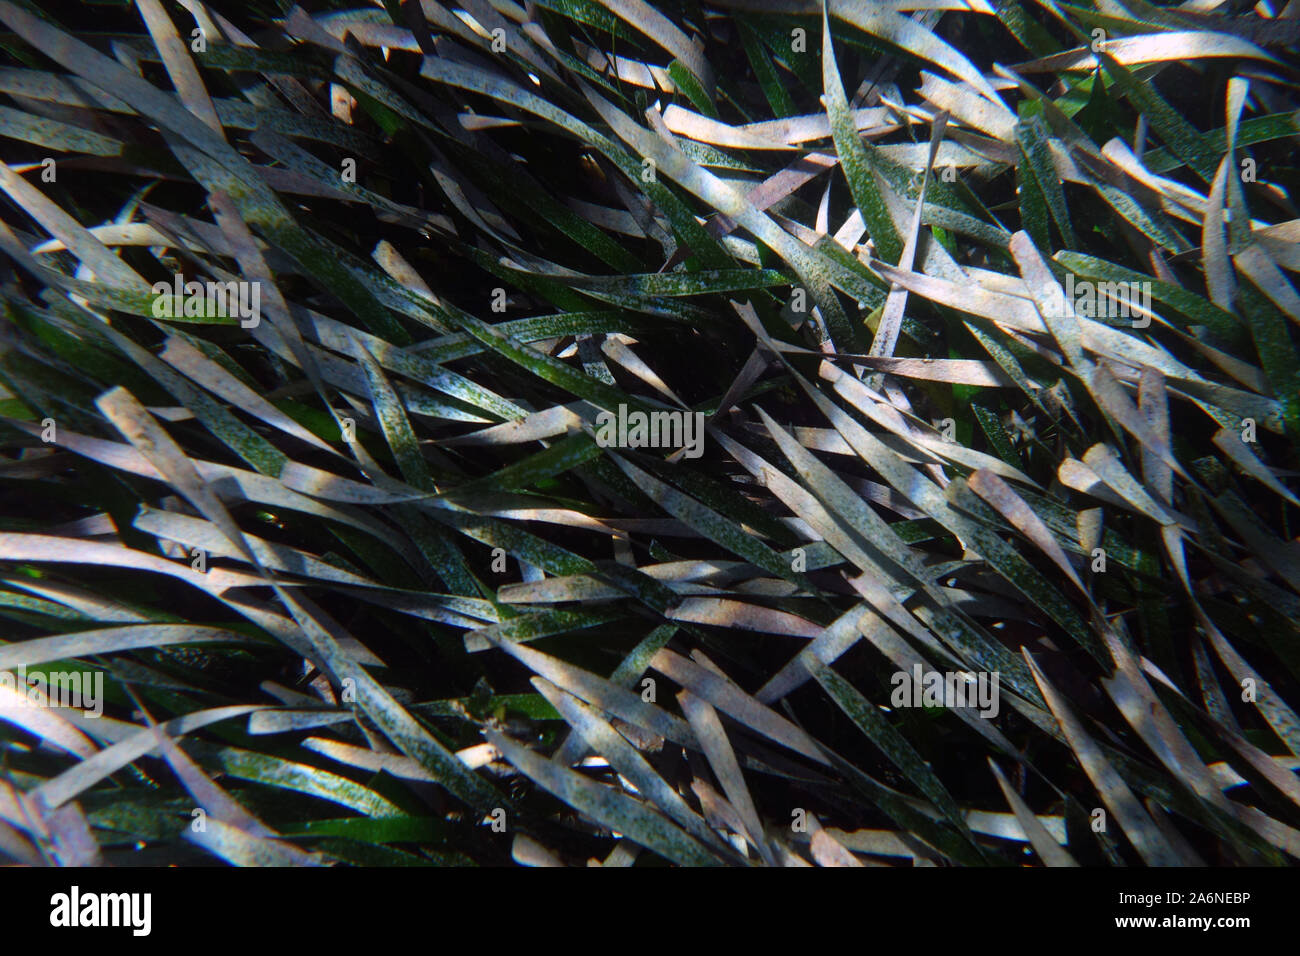 Healthy Posidonia seagrass meadow underwater, Rottnest Island, Western Australia Stock Photo